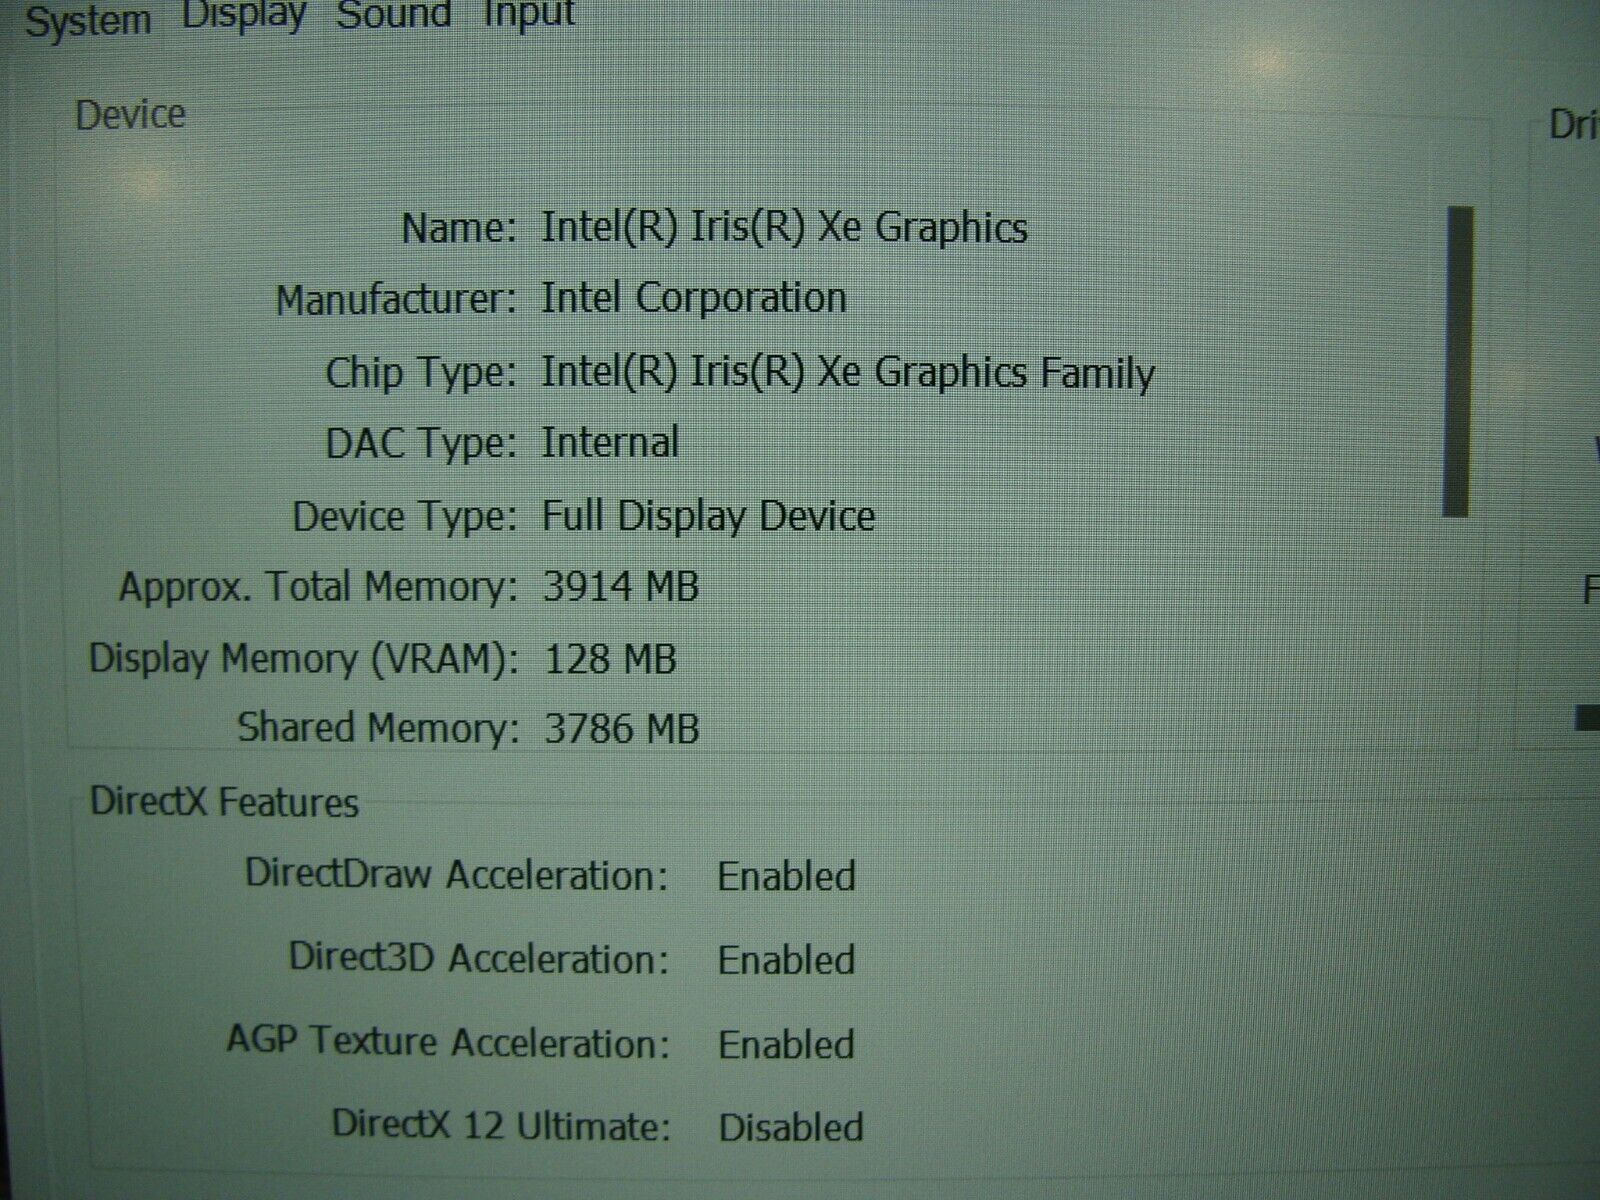 Dell Latitude 5420 Intel i7 11th Gen 14